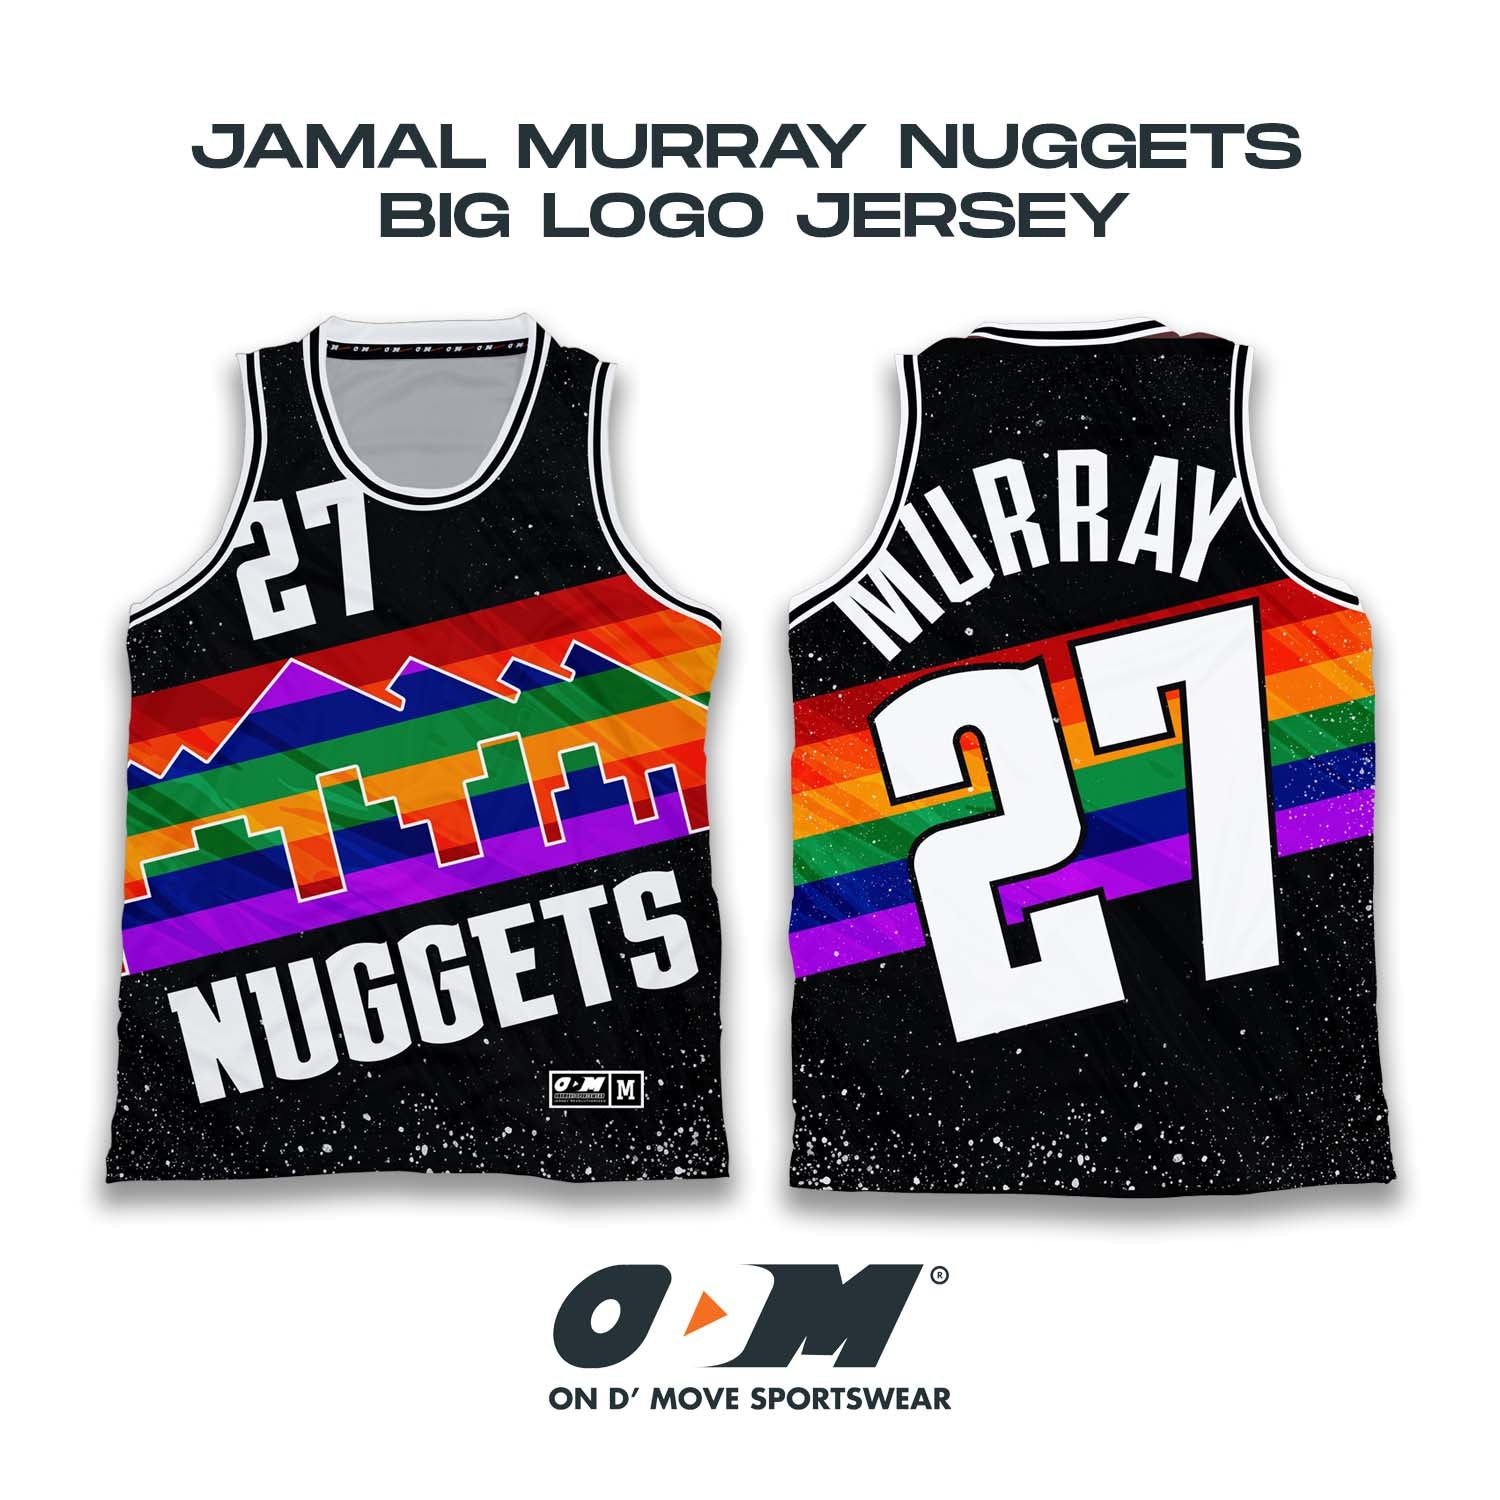 Jamal Murray Nuggets Big Logo Jersey